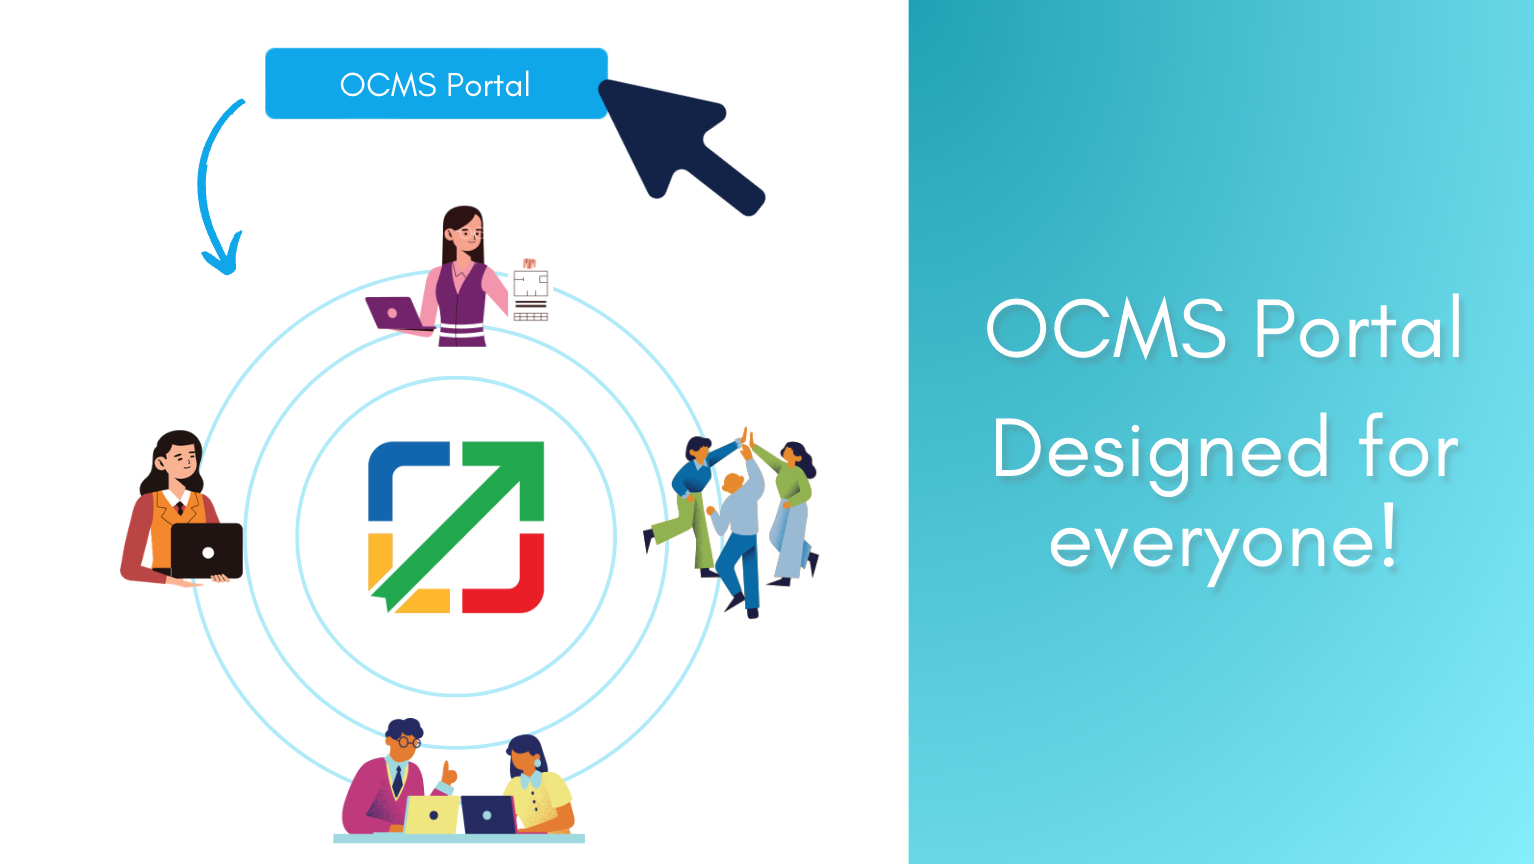 OCMS Portal - Built for anyone